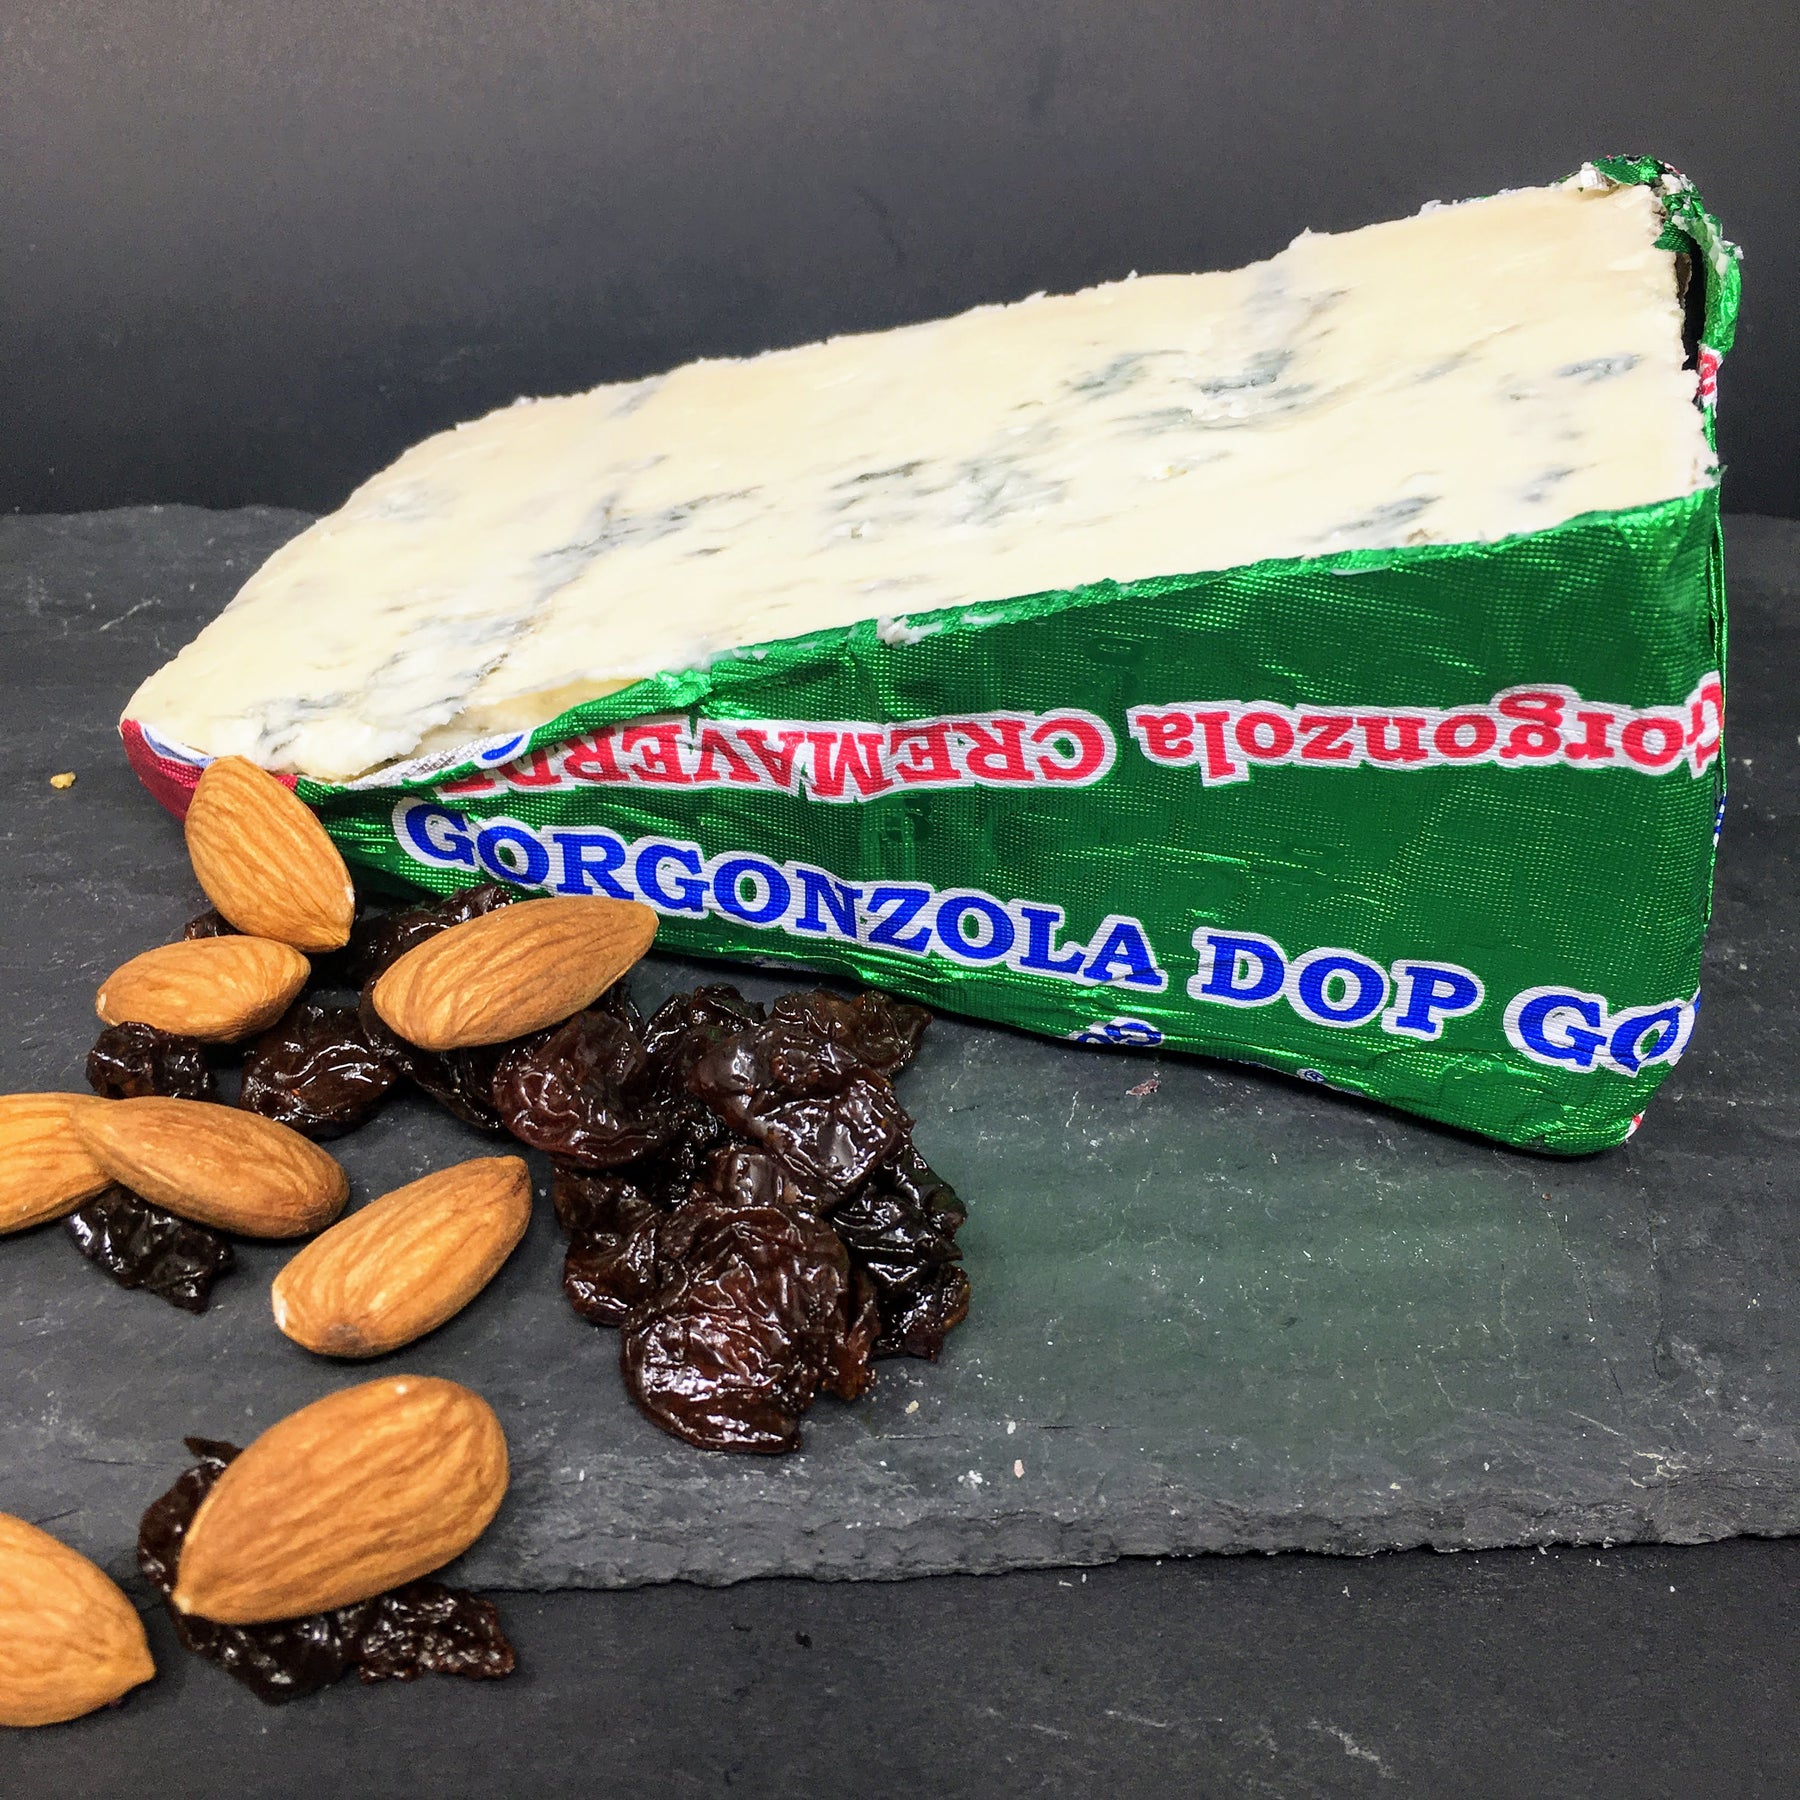 Gorgonzola Cheese: A Delicious and Versatile Blue Cheese